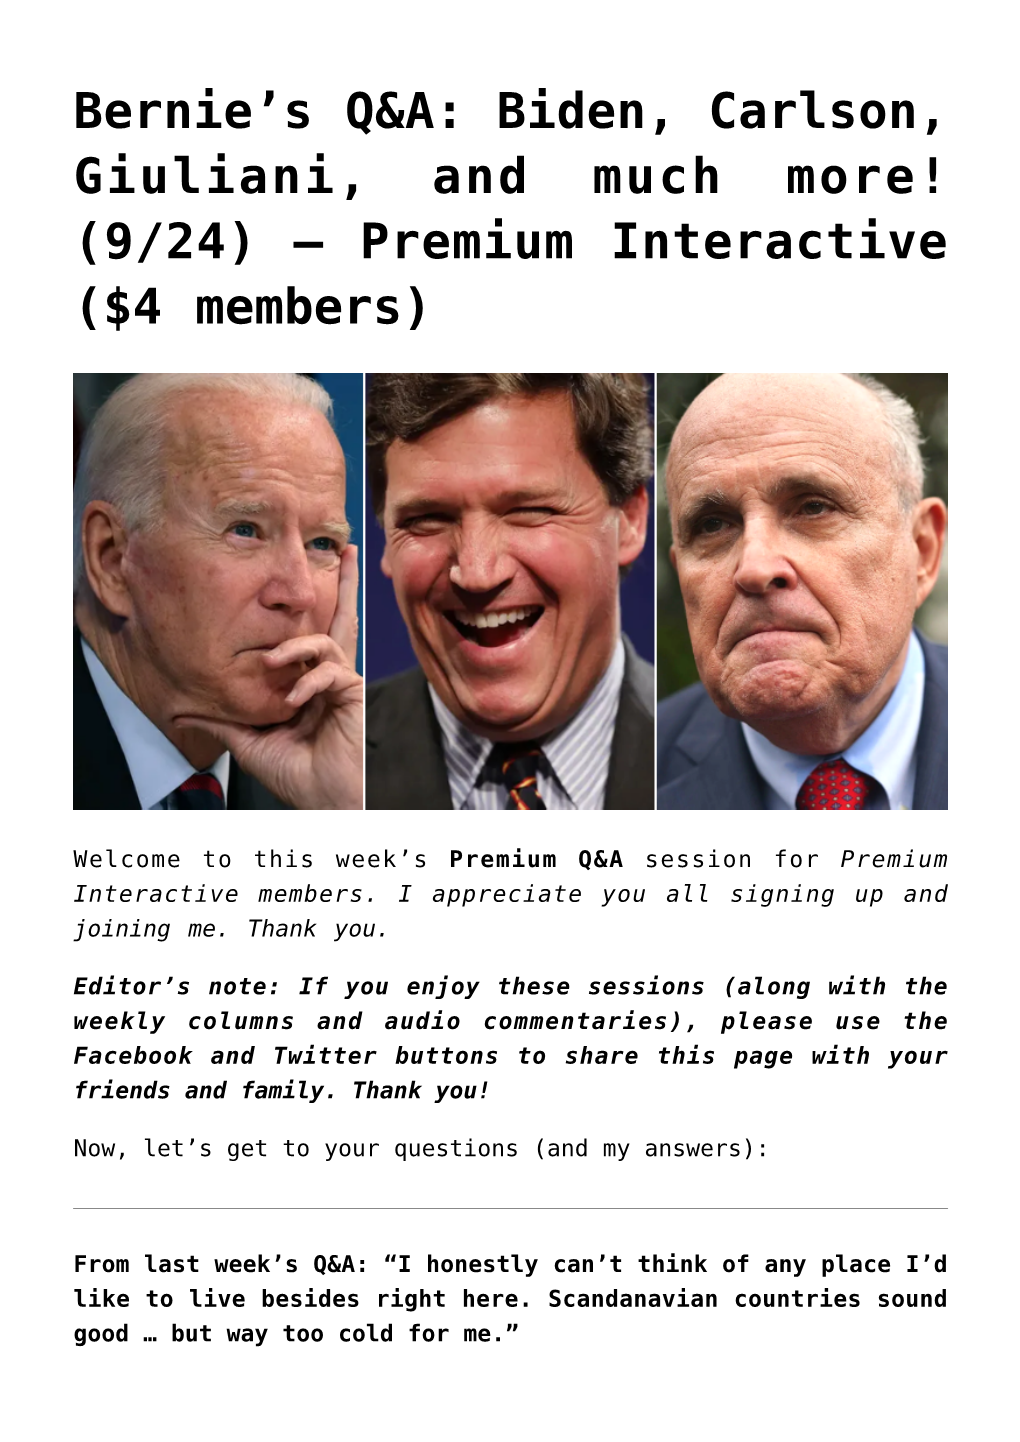 Bernie's Q&A: Carlson, Cheney, Hawley, and More! (5/7) — Premium Interactive ($4 Members),Off the Cuff: the Gun Violence